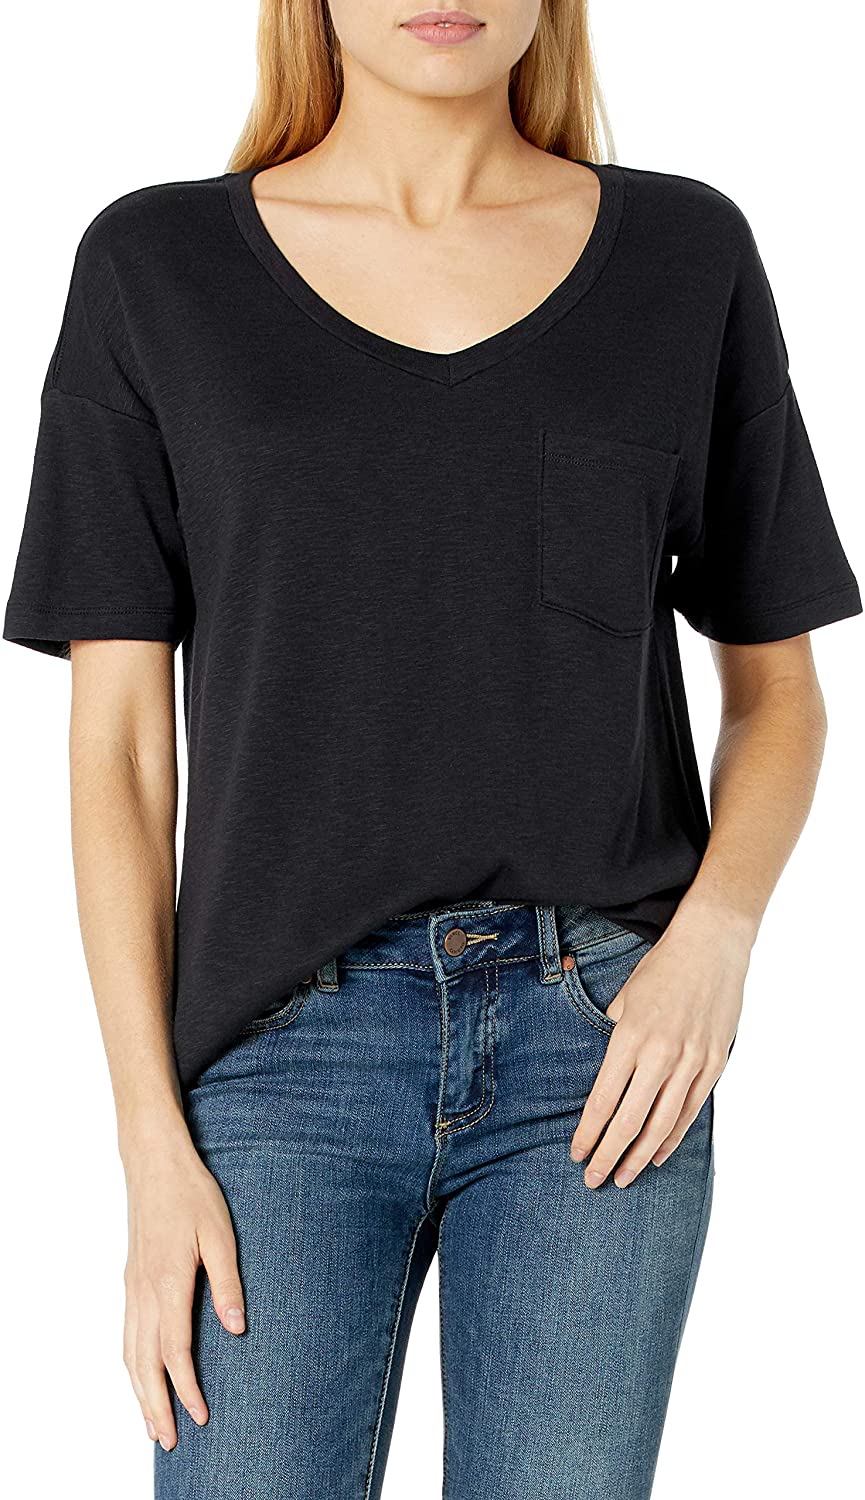 Price:$12.82    Amazon Brand - Daily Ritual Women's Cotton Modal Stretch Slub Oversized Short-Sleeve V-Neck Pocket T-Shirt  Clothing